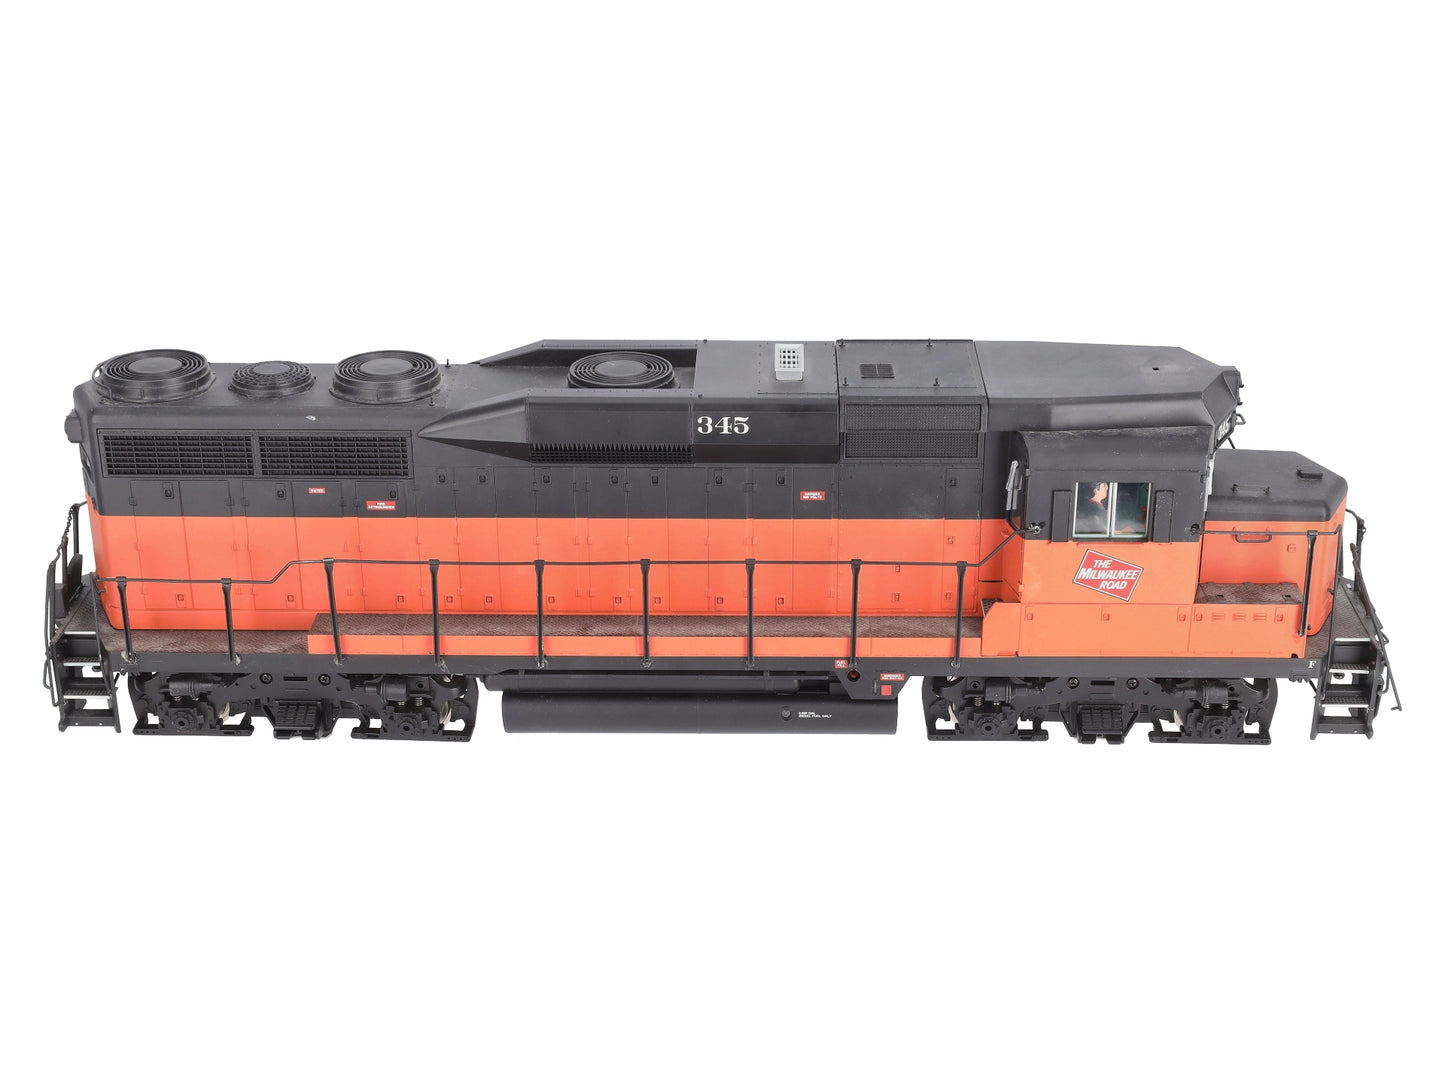 USA Trains R22464 G Scale Milwaukee Road GP30 Diesel Locomotive #345